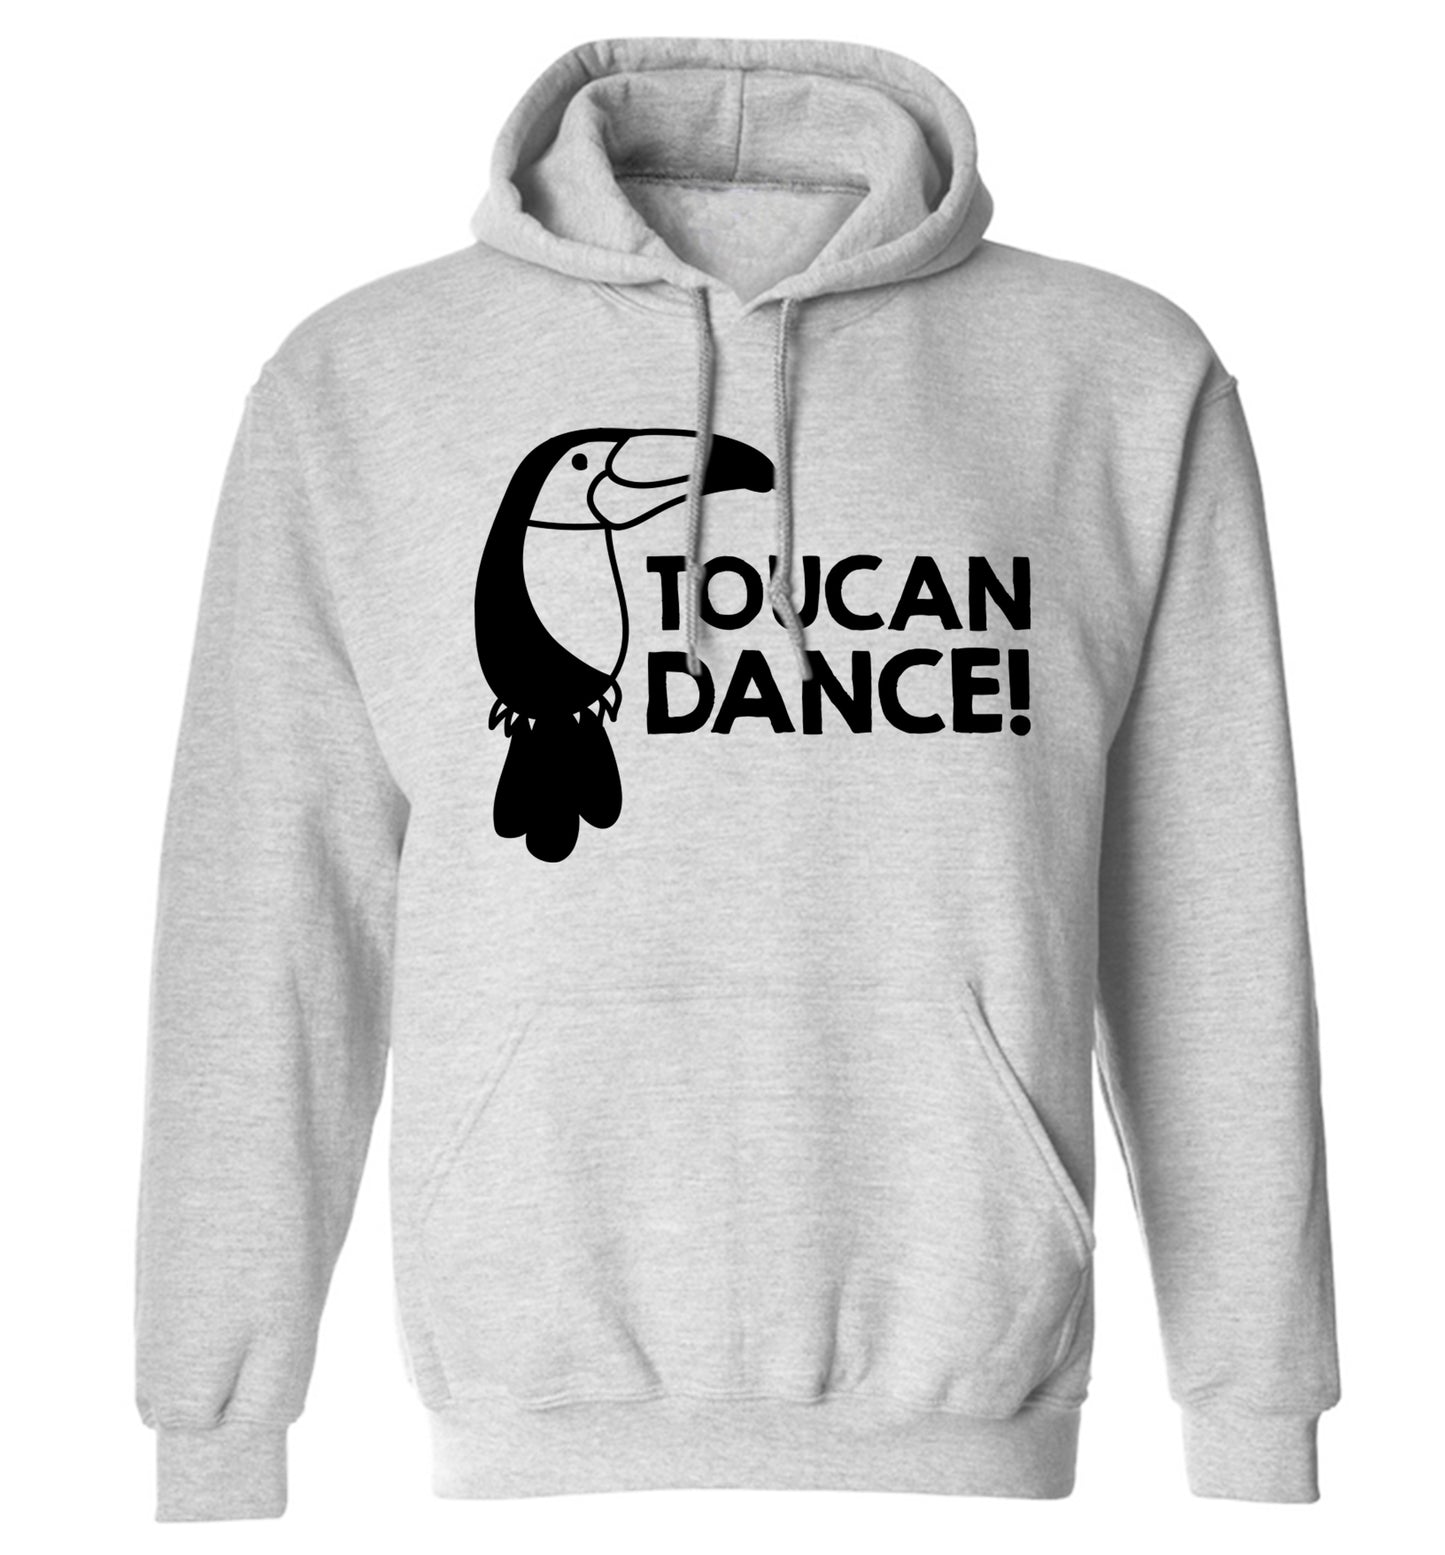 Toucan dance adults unisex grey hoodie 2XL